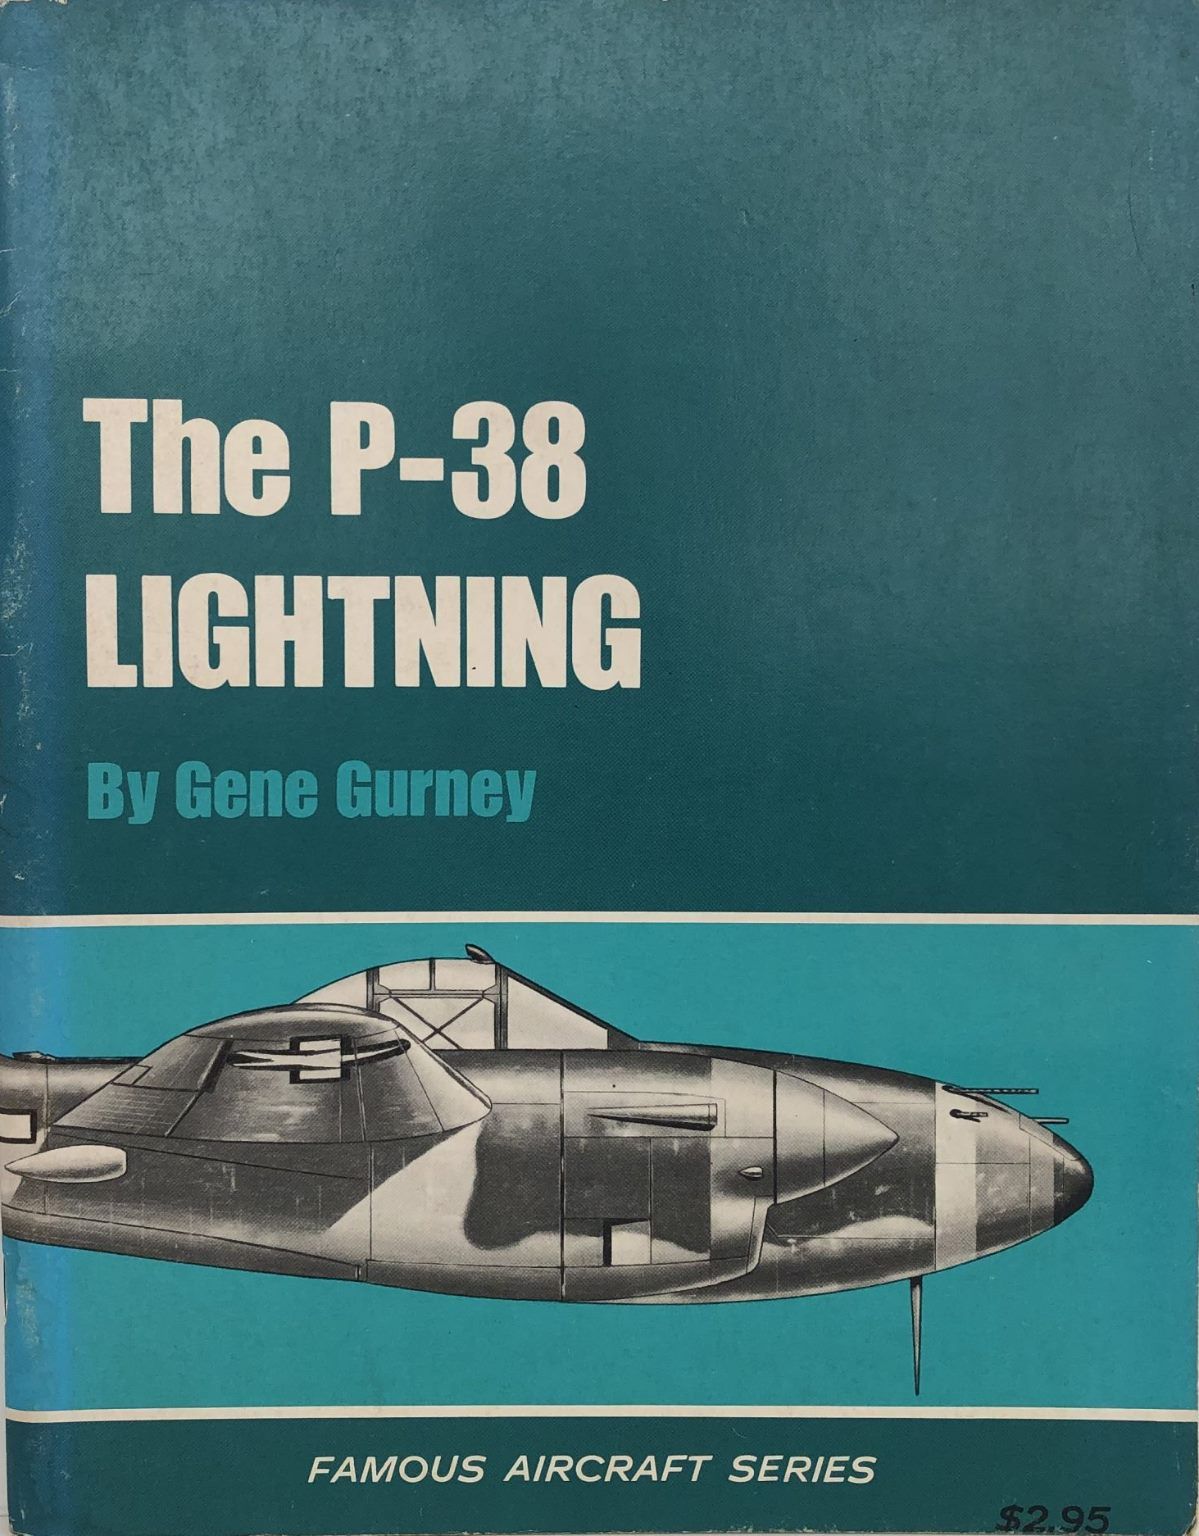 THE P-38 LIGHTNING